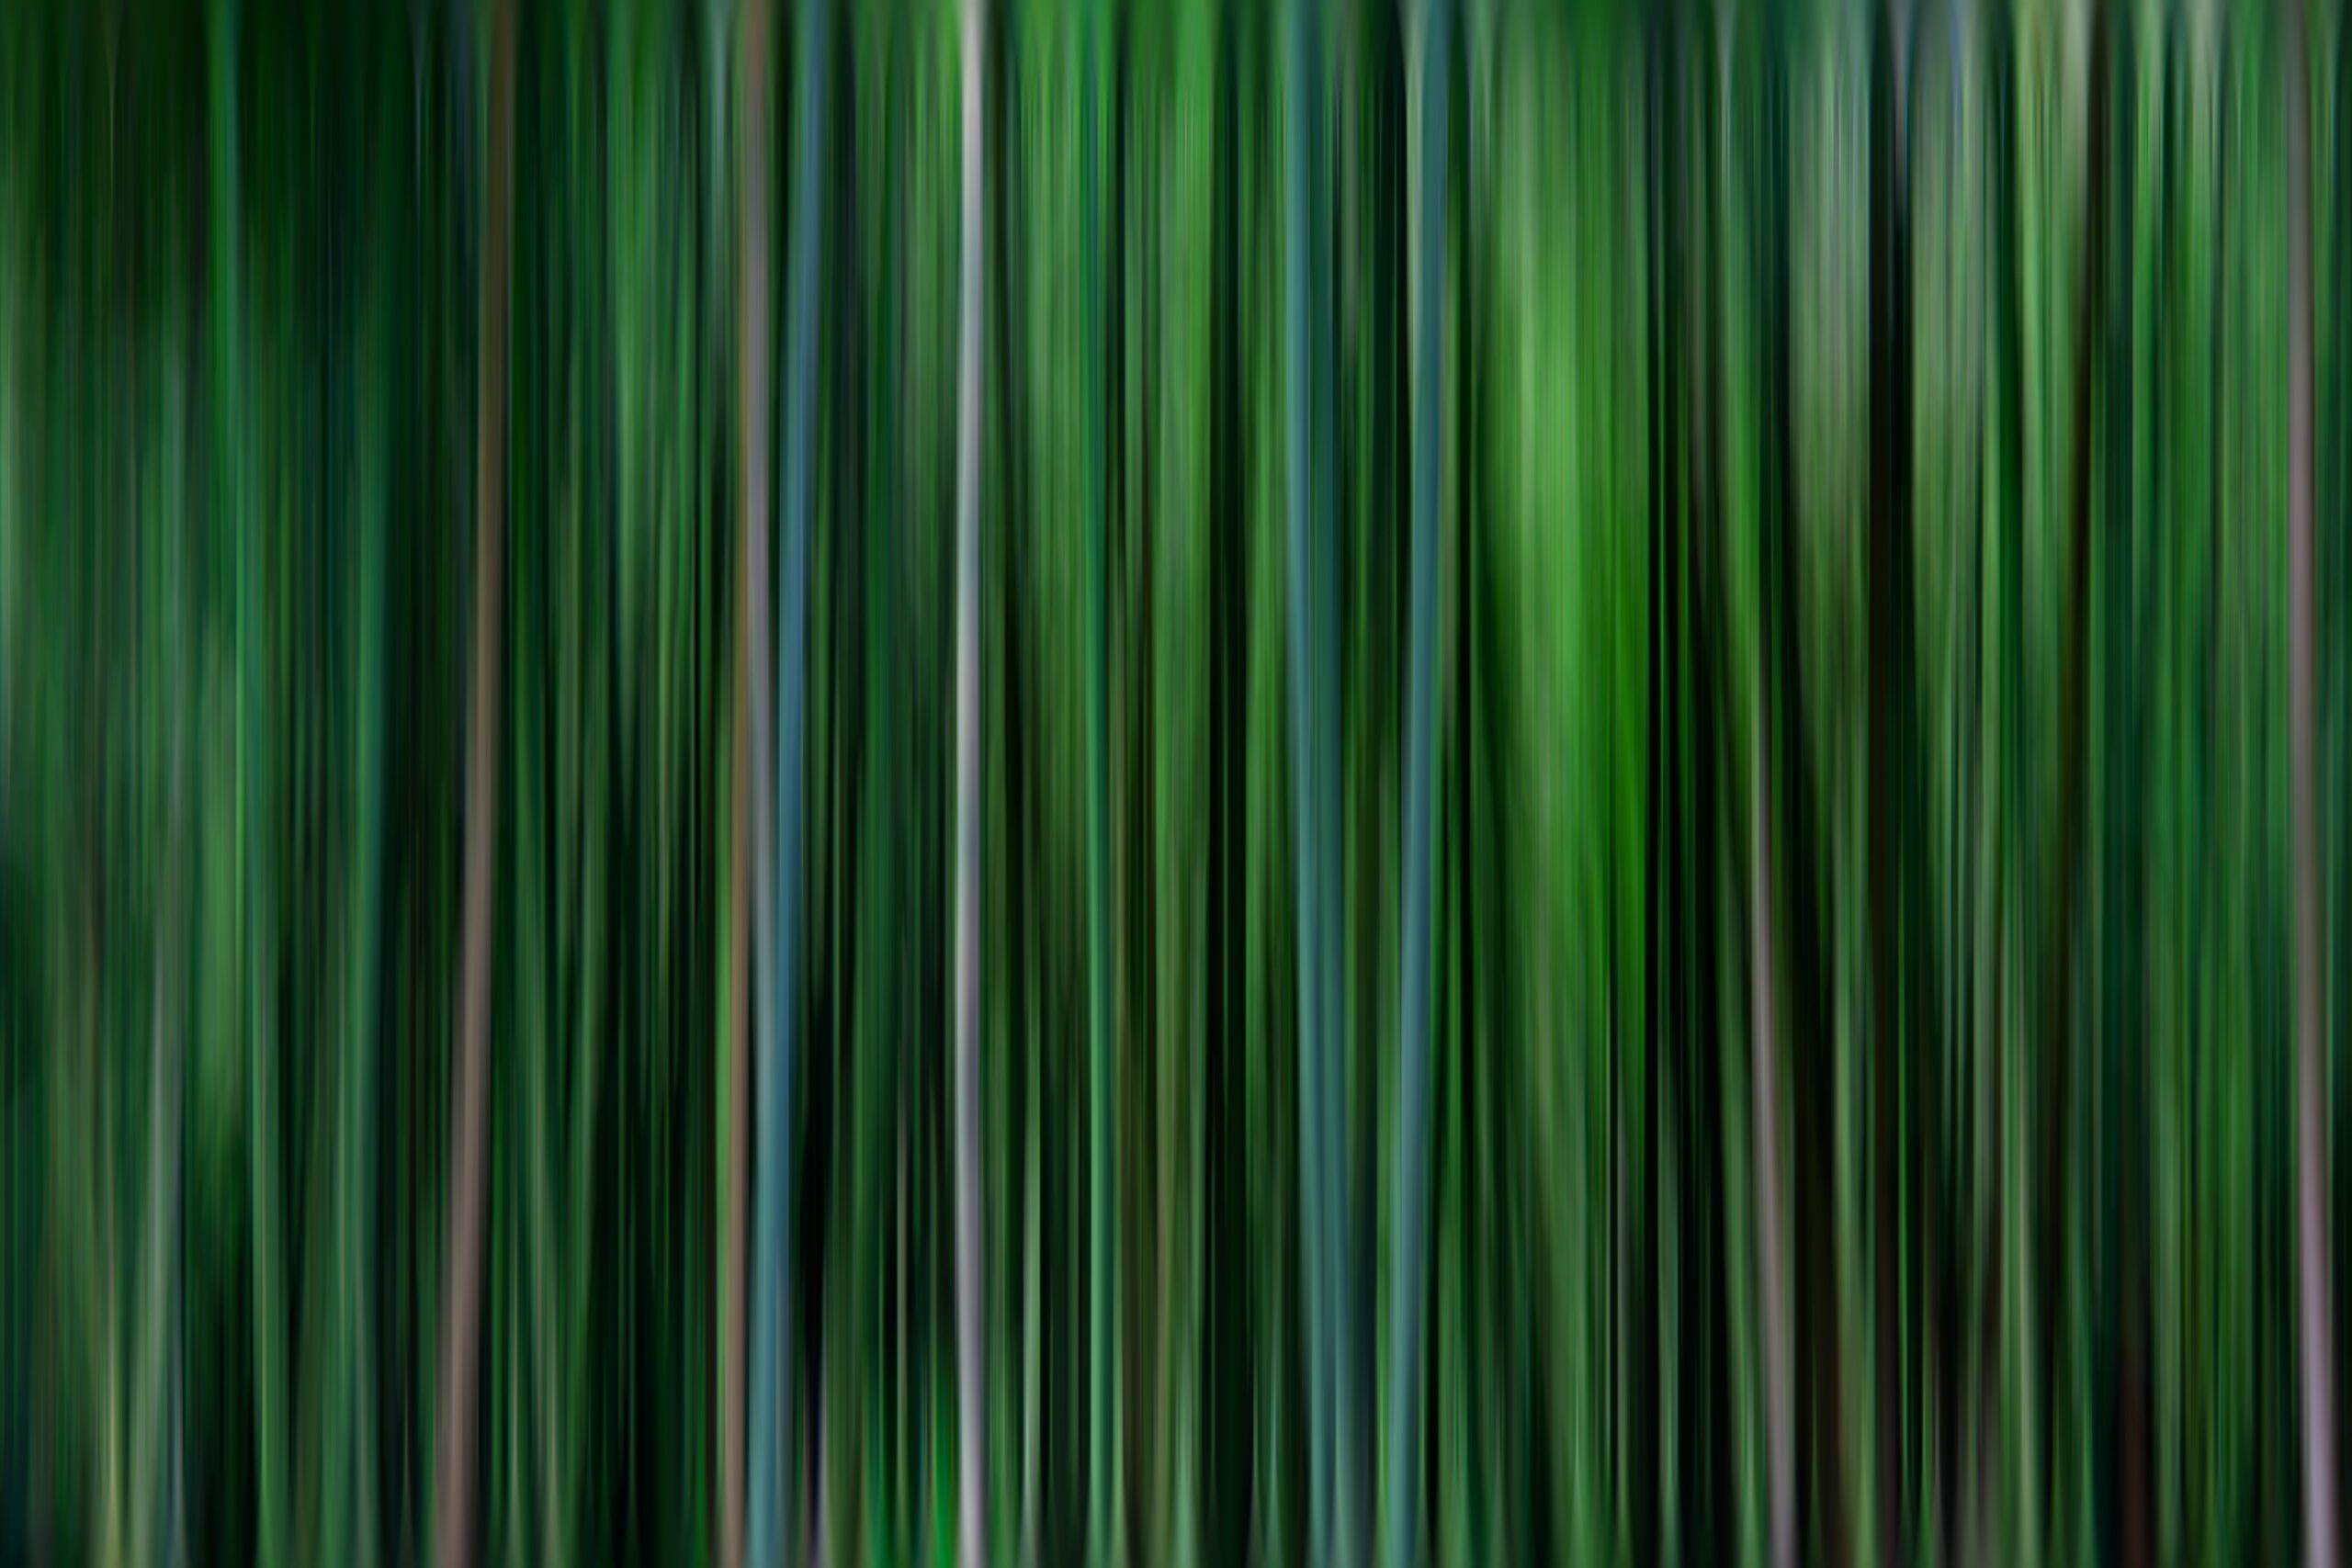 Embark on a visual journey through Maui’s dense bamboo jungles.